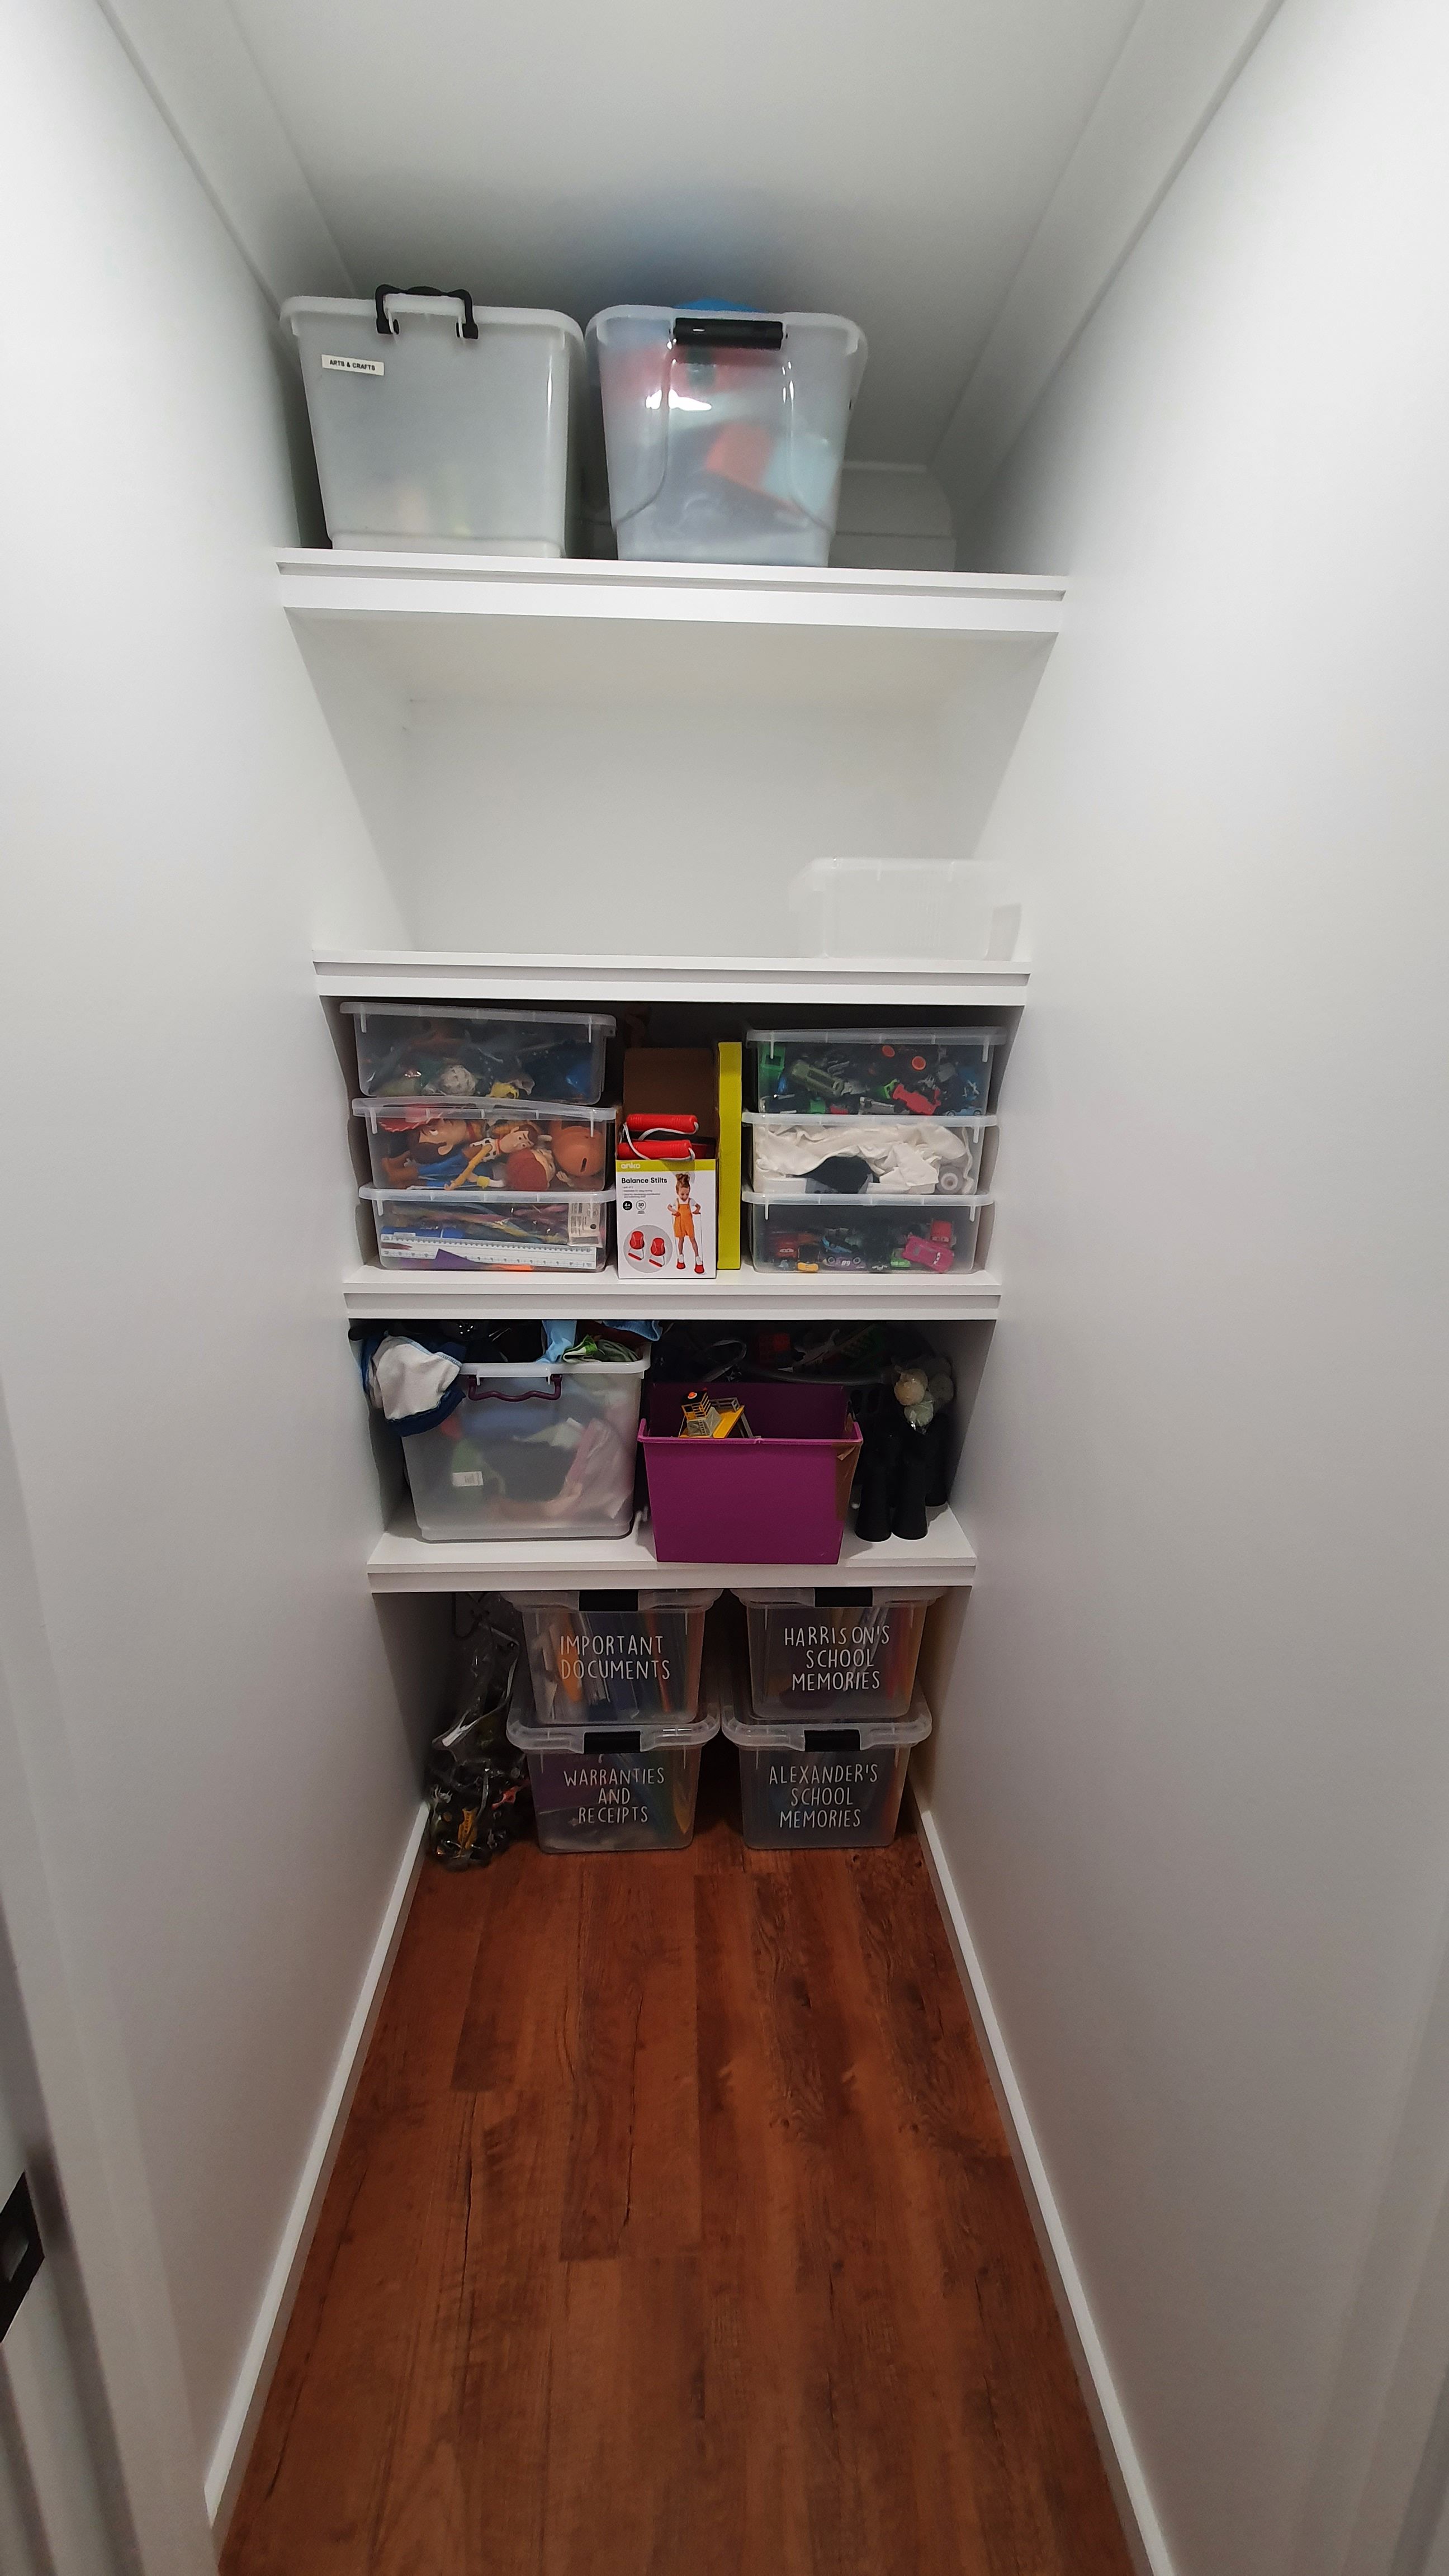 Wardrobe and storeroom shelves | Bunnings Workshop community